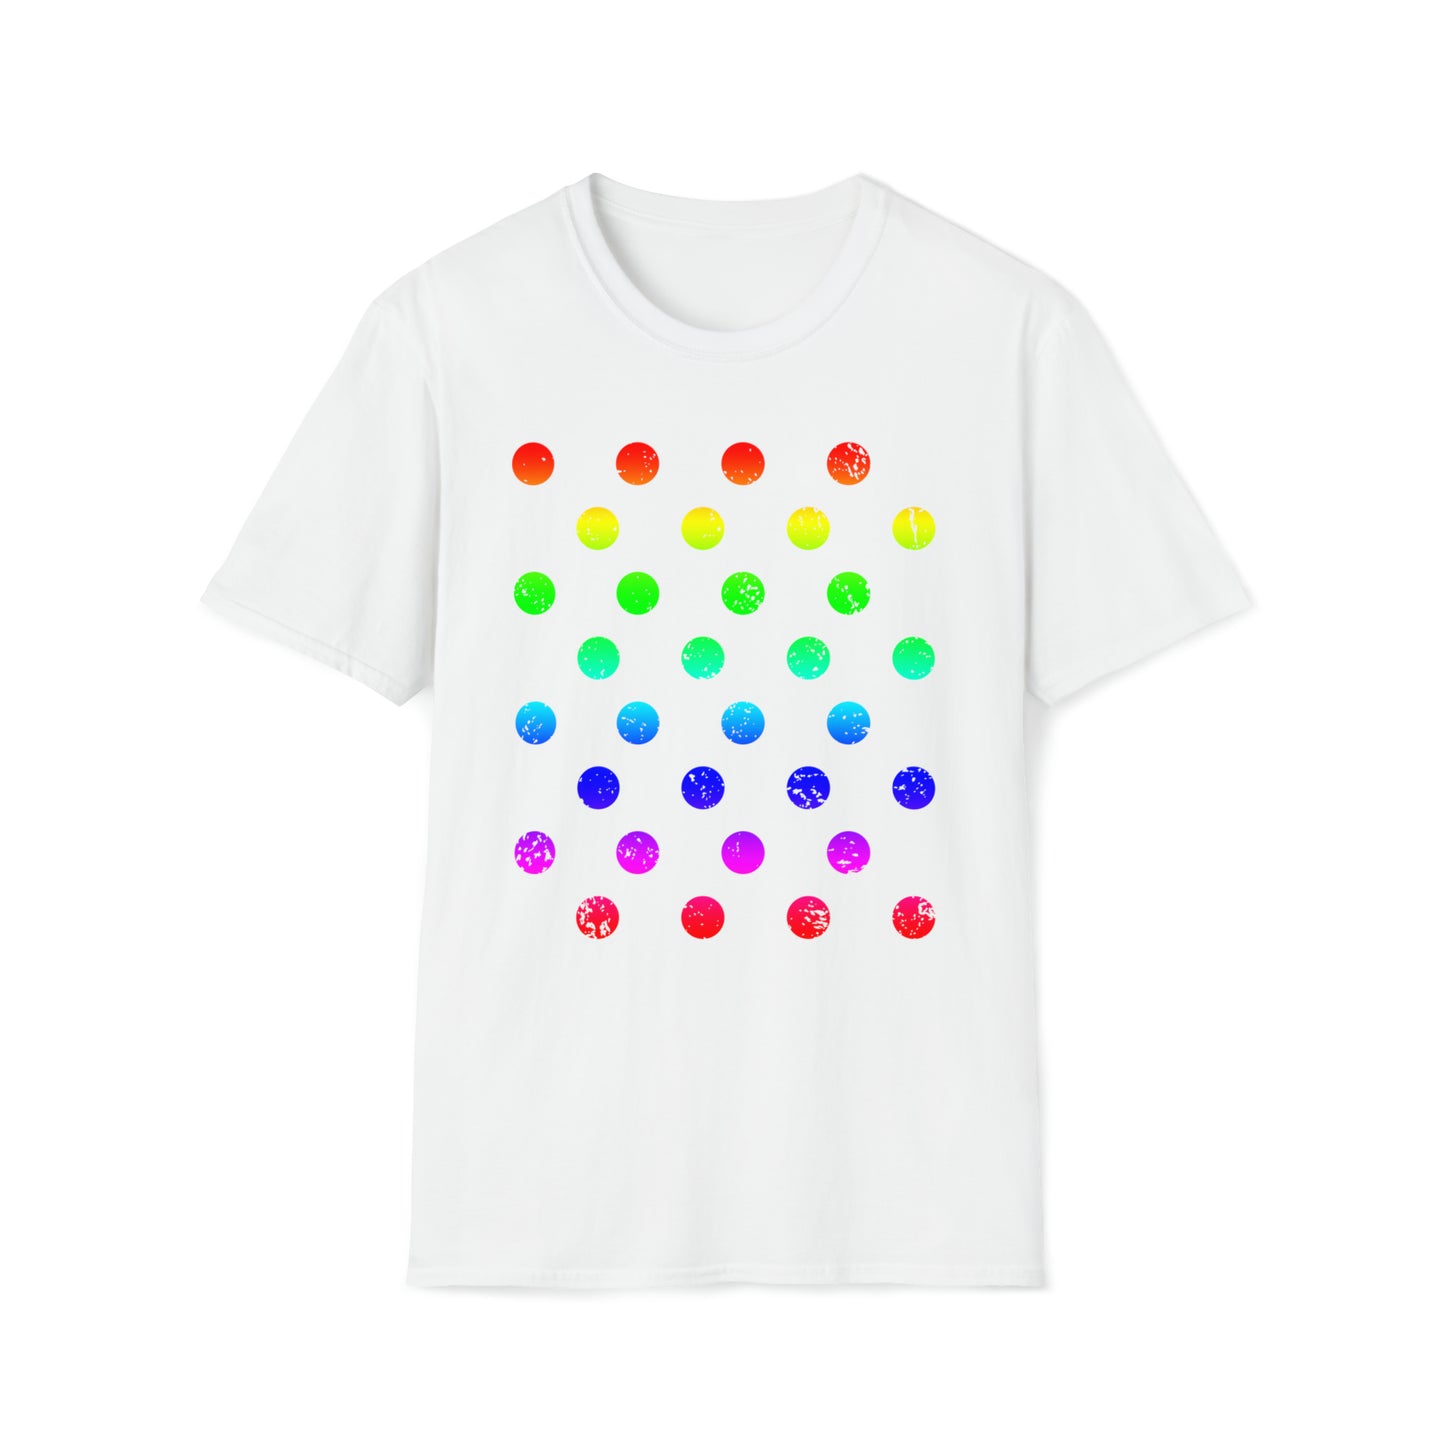 September 15th Retro Distressed Dot T-Shirt: Vintage Rainbow Design Tee